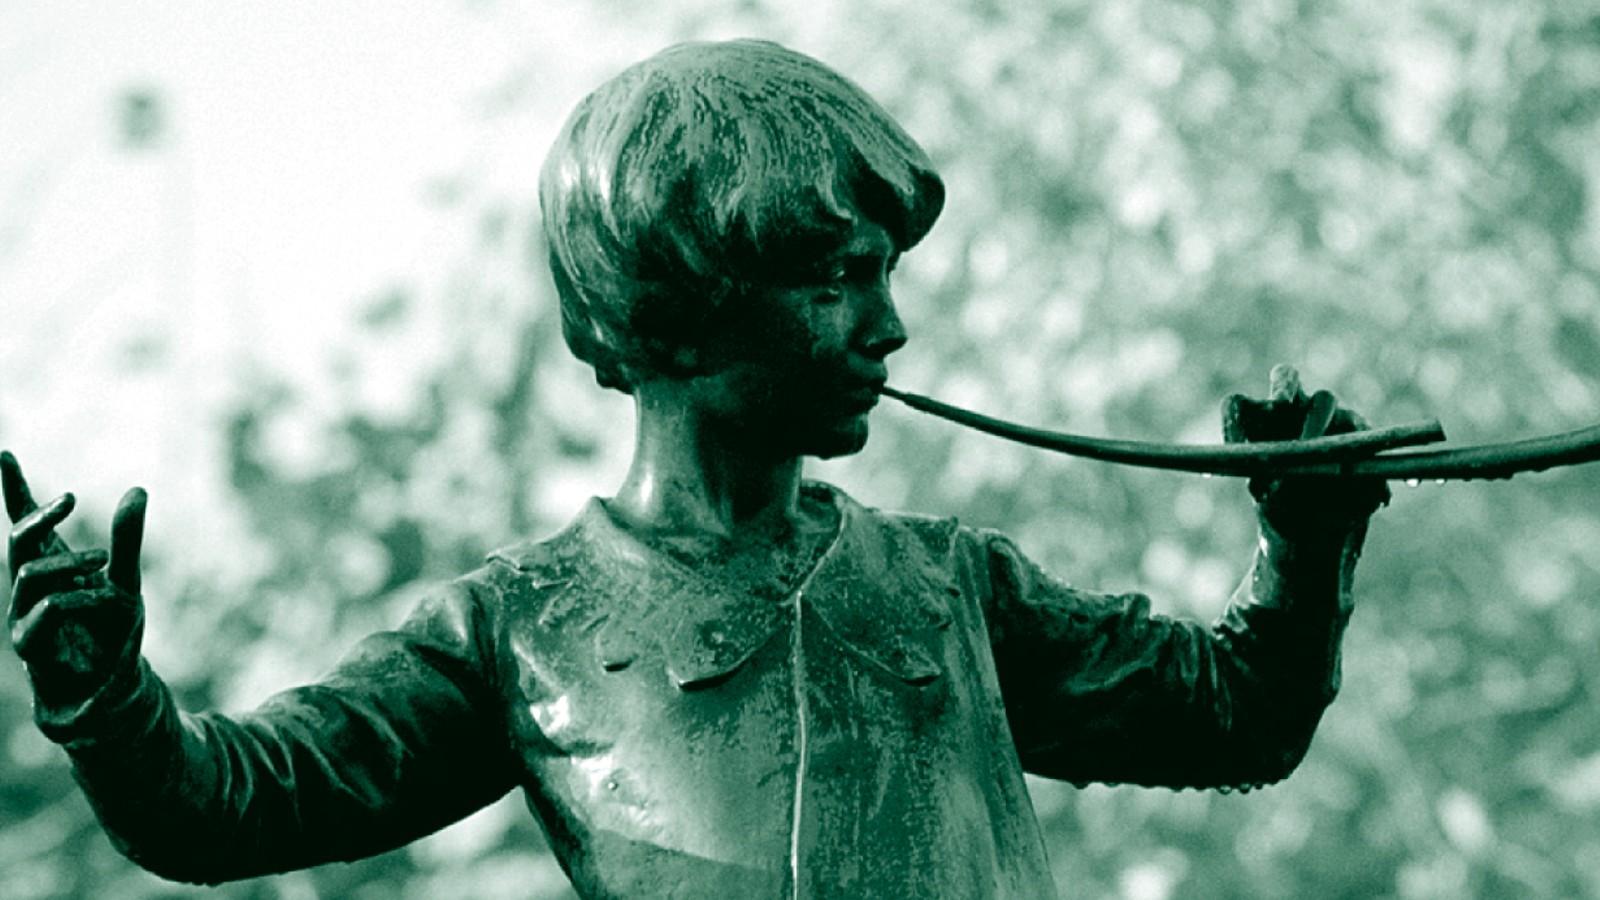 The Peter Pan statue in Kensington Gardens.